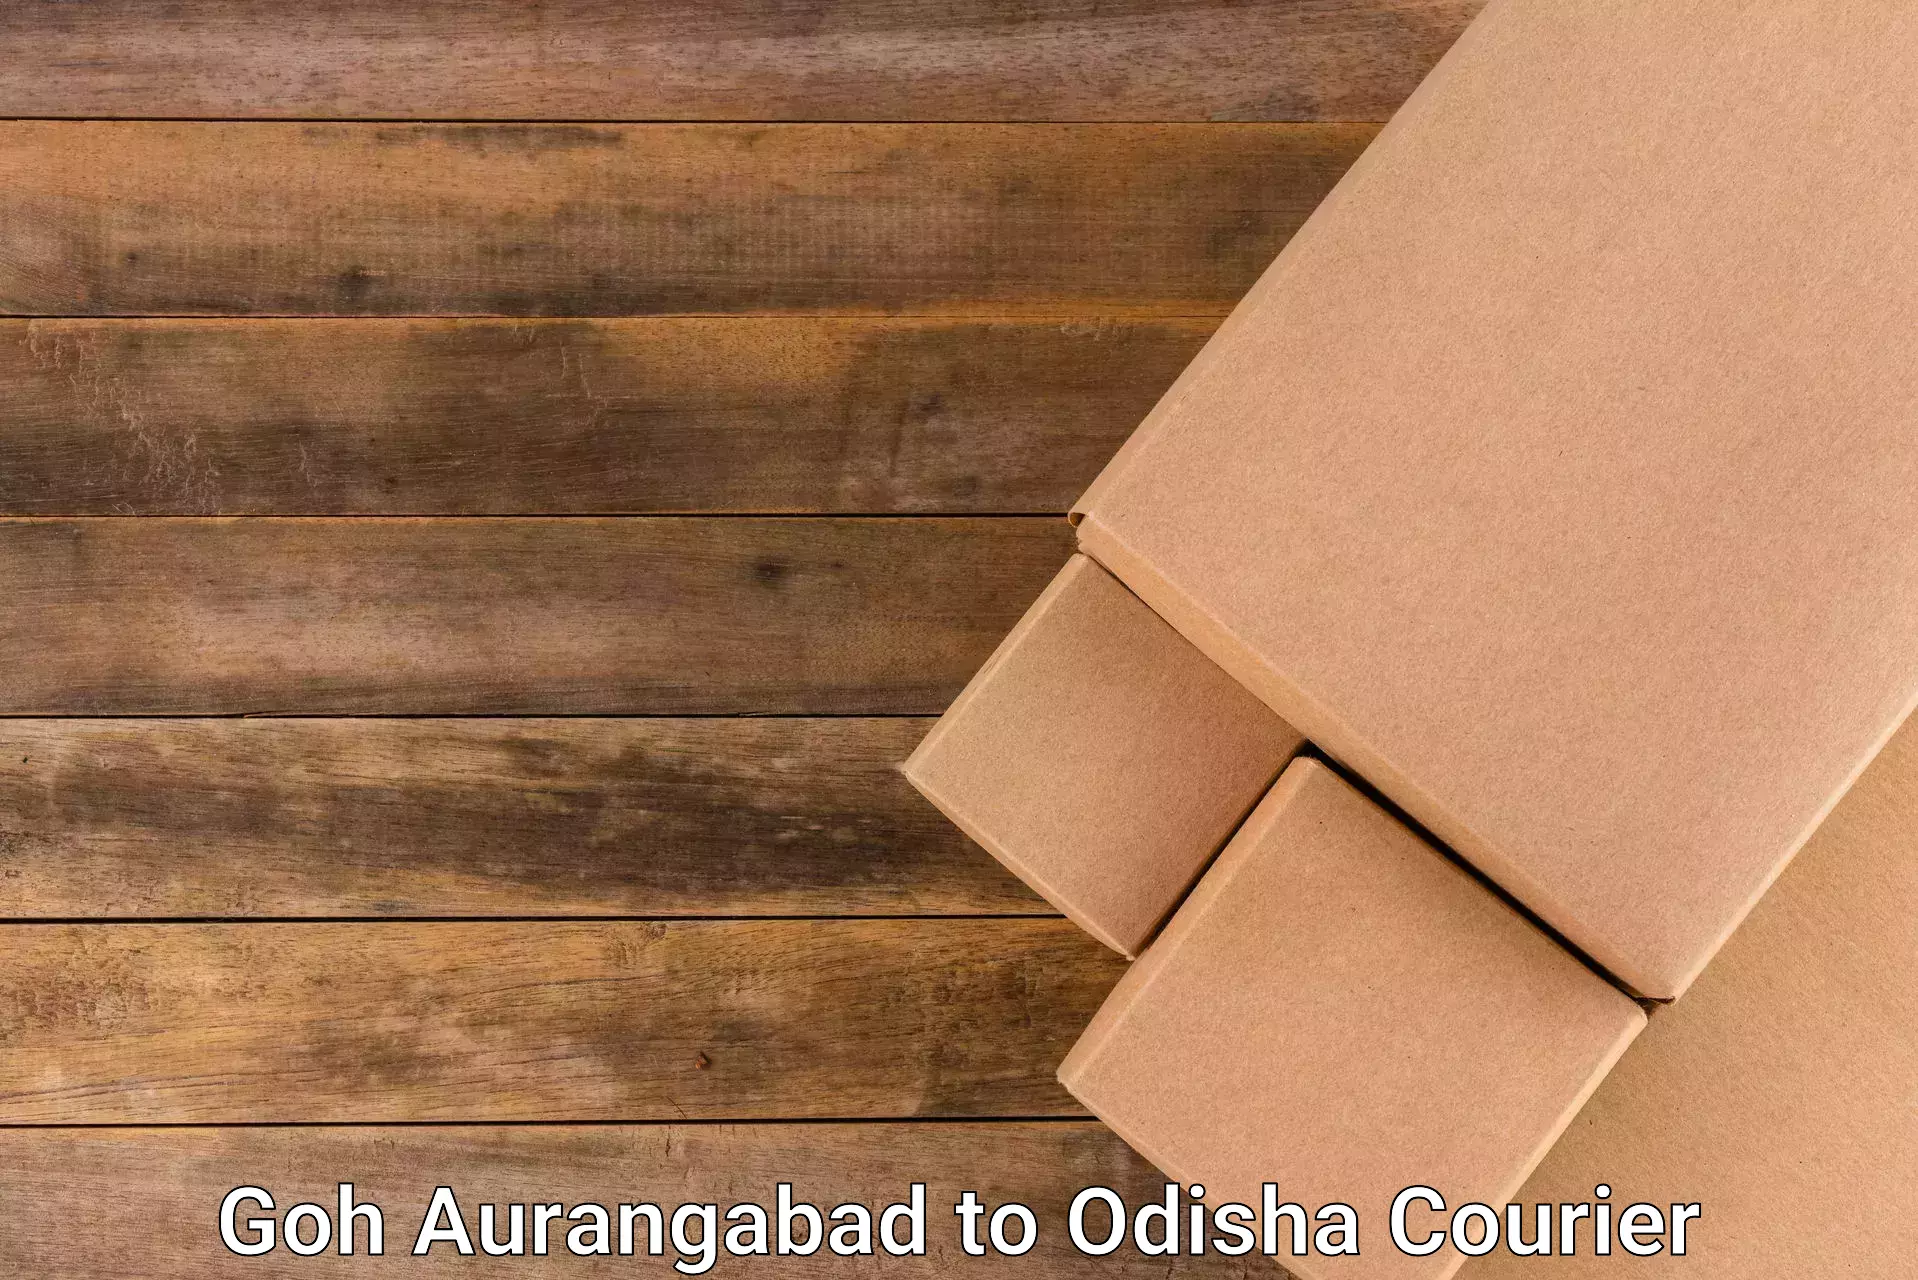 Courier service efficiency Goh Aurangabad to Odisha